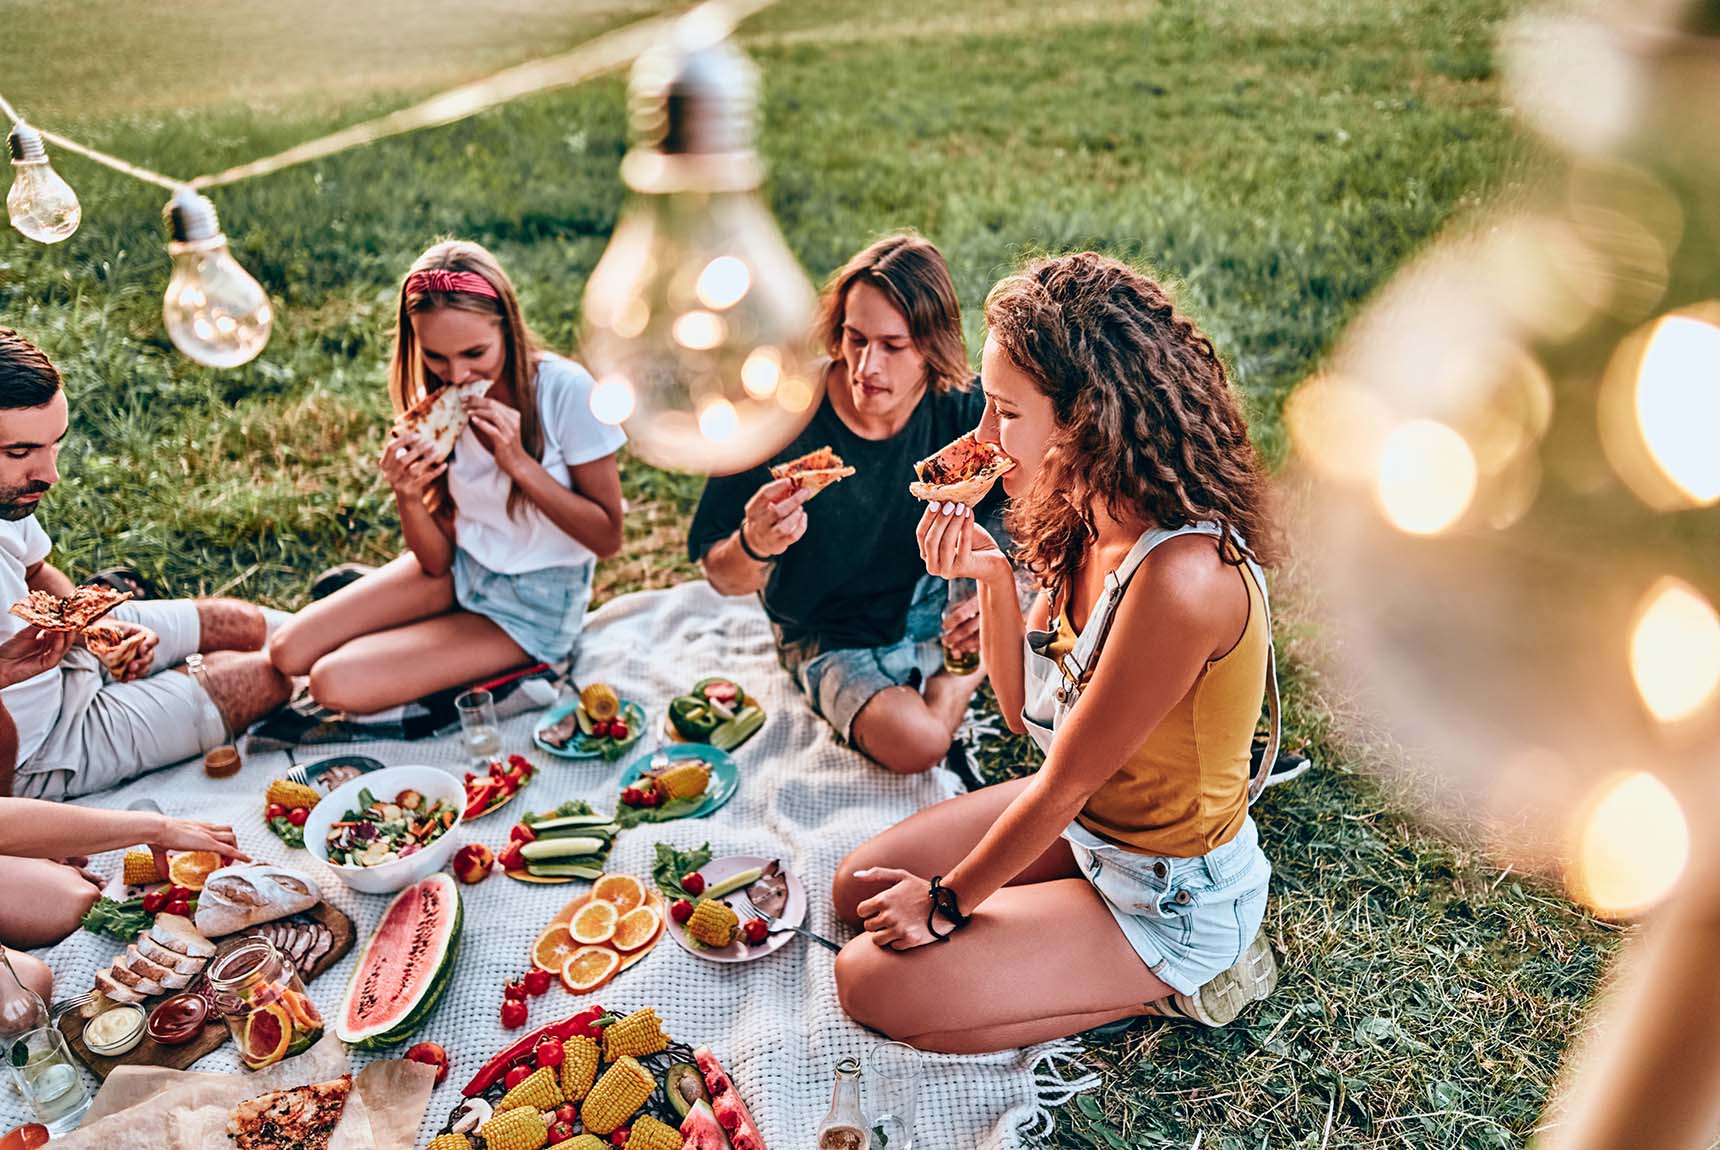 Pique-nique en famille - Family picnic